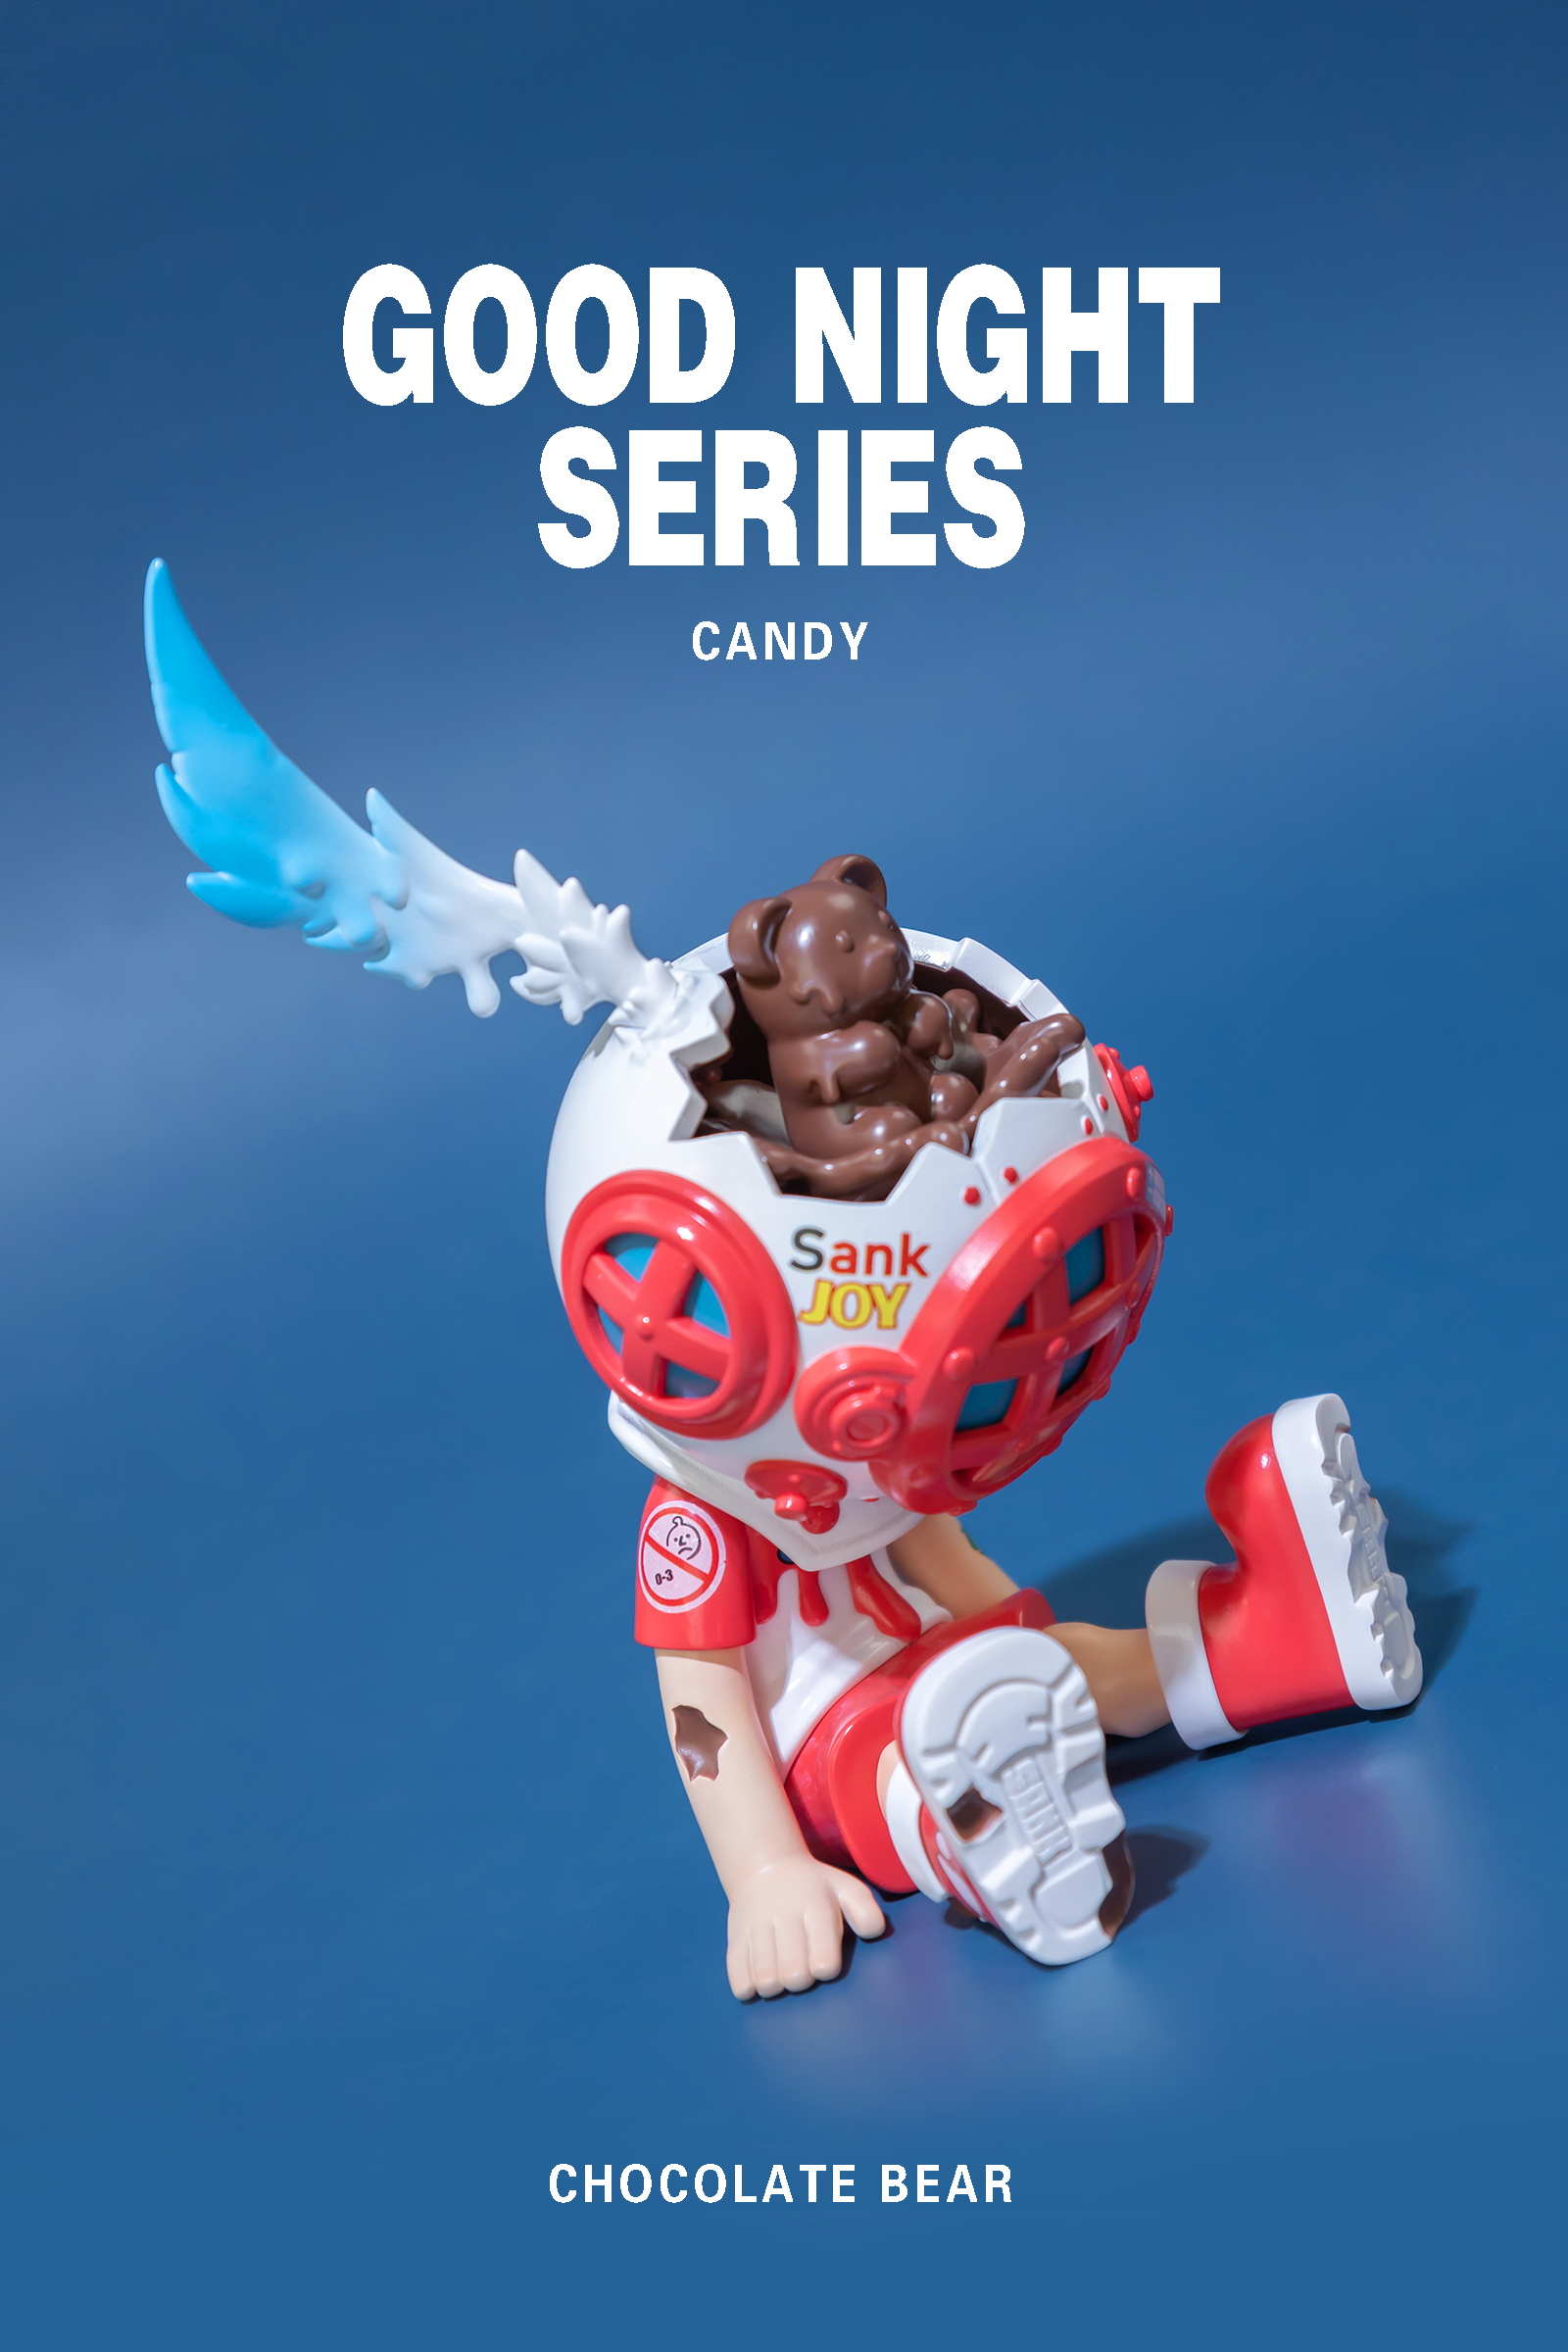 Good Night Series-Candy-Chocolate Bear